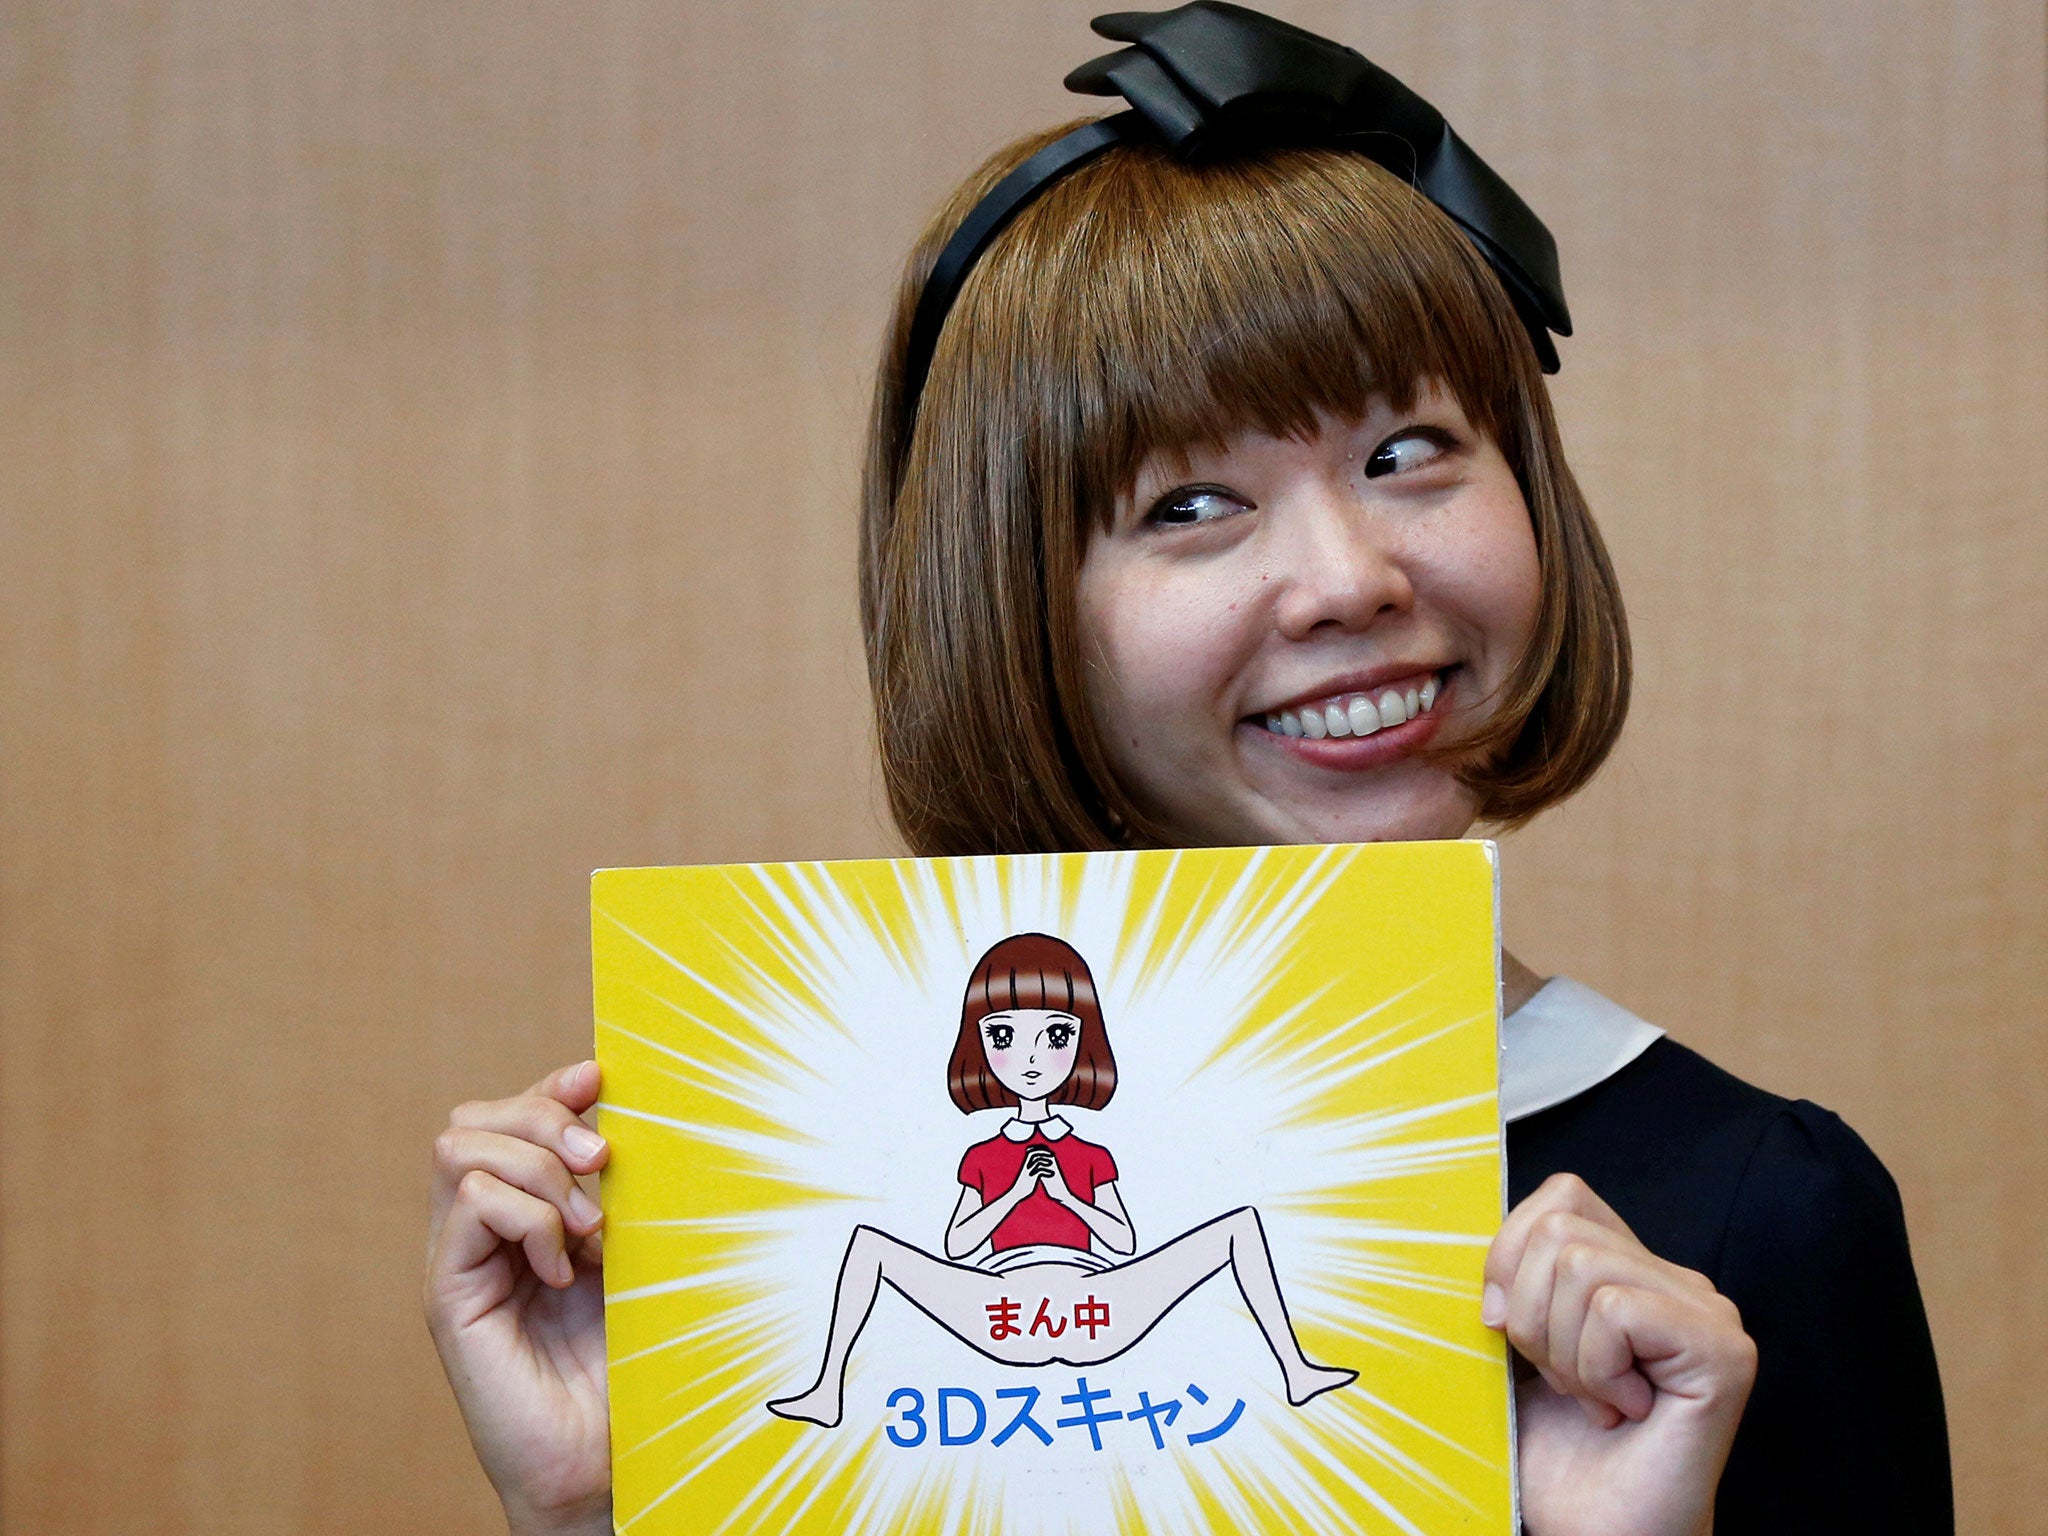 Porn Nudist Pussy - Megumi Igarashi found guilty of obscenity over 'vagina kayak' artwork | The  Independent | The Independent